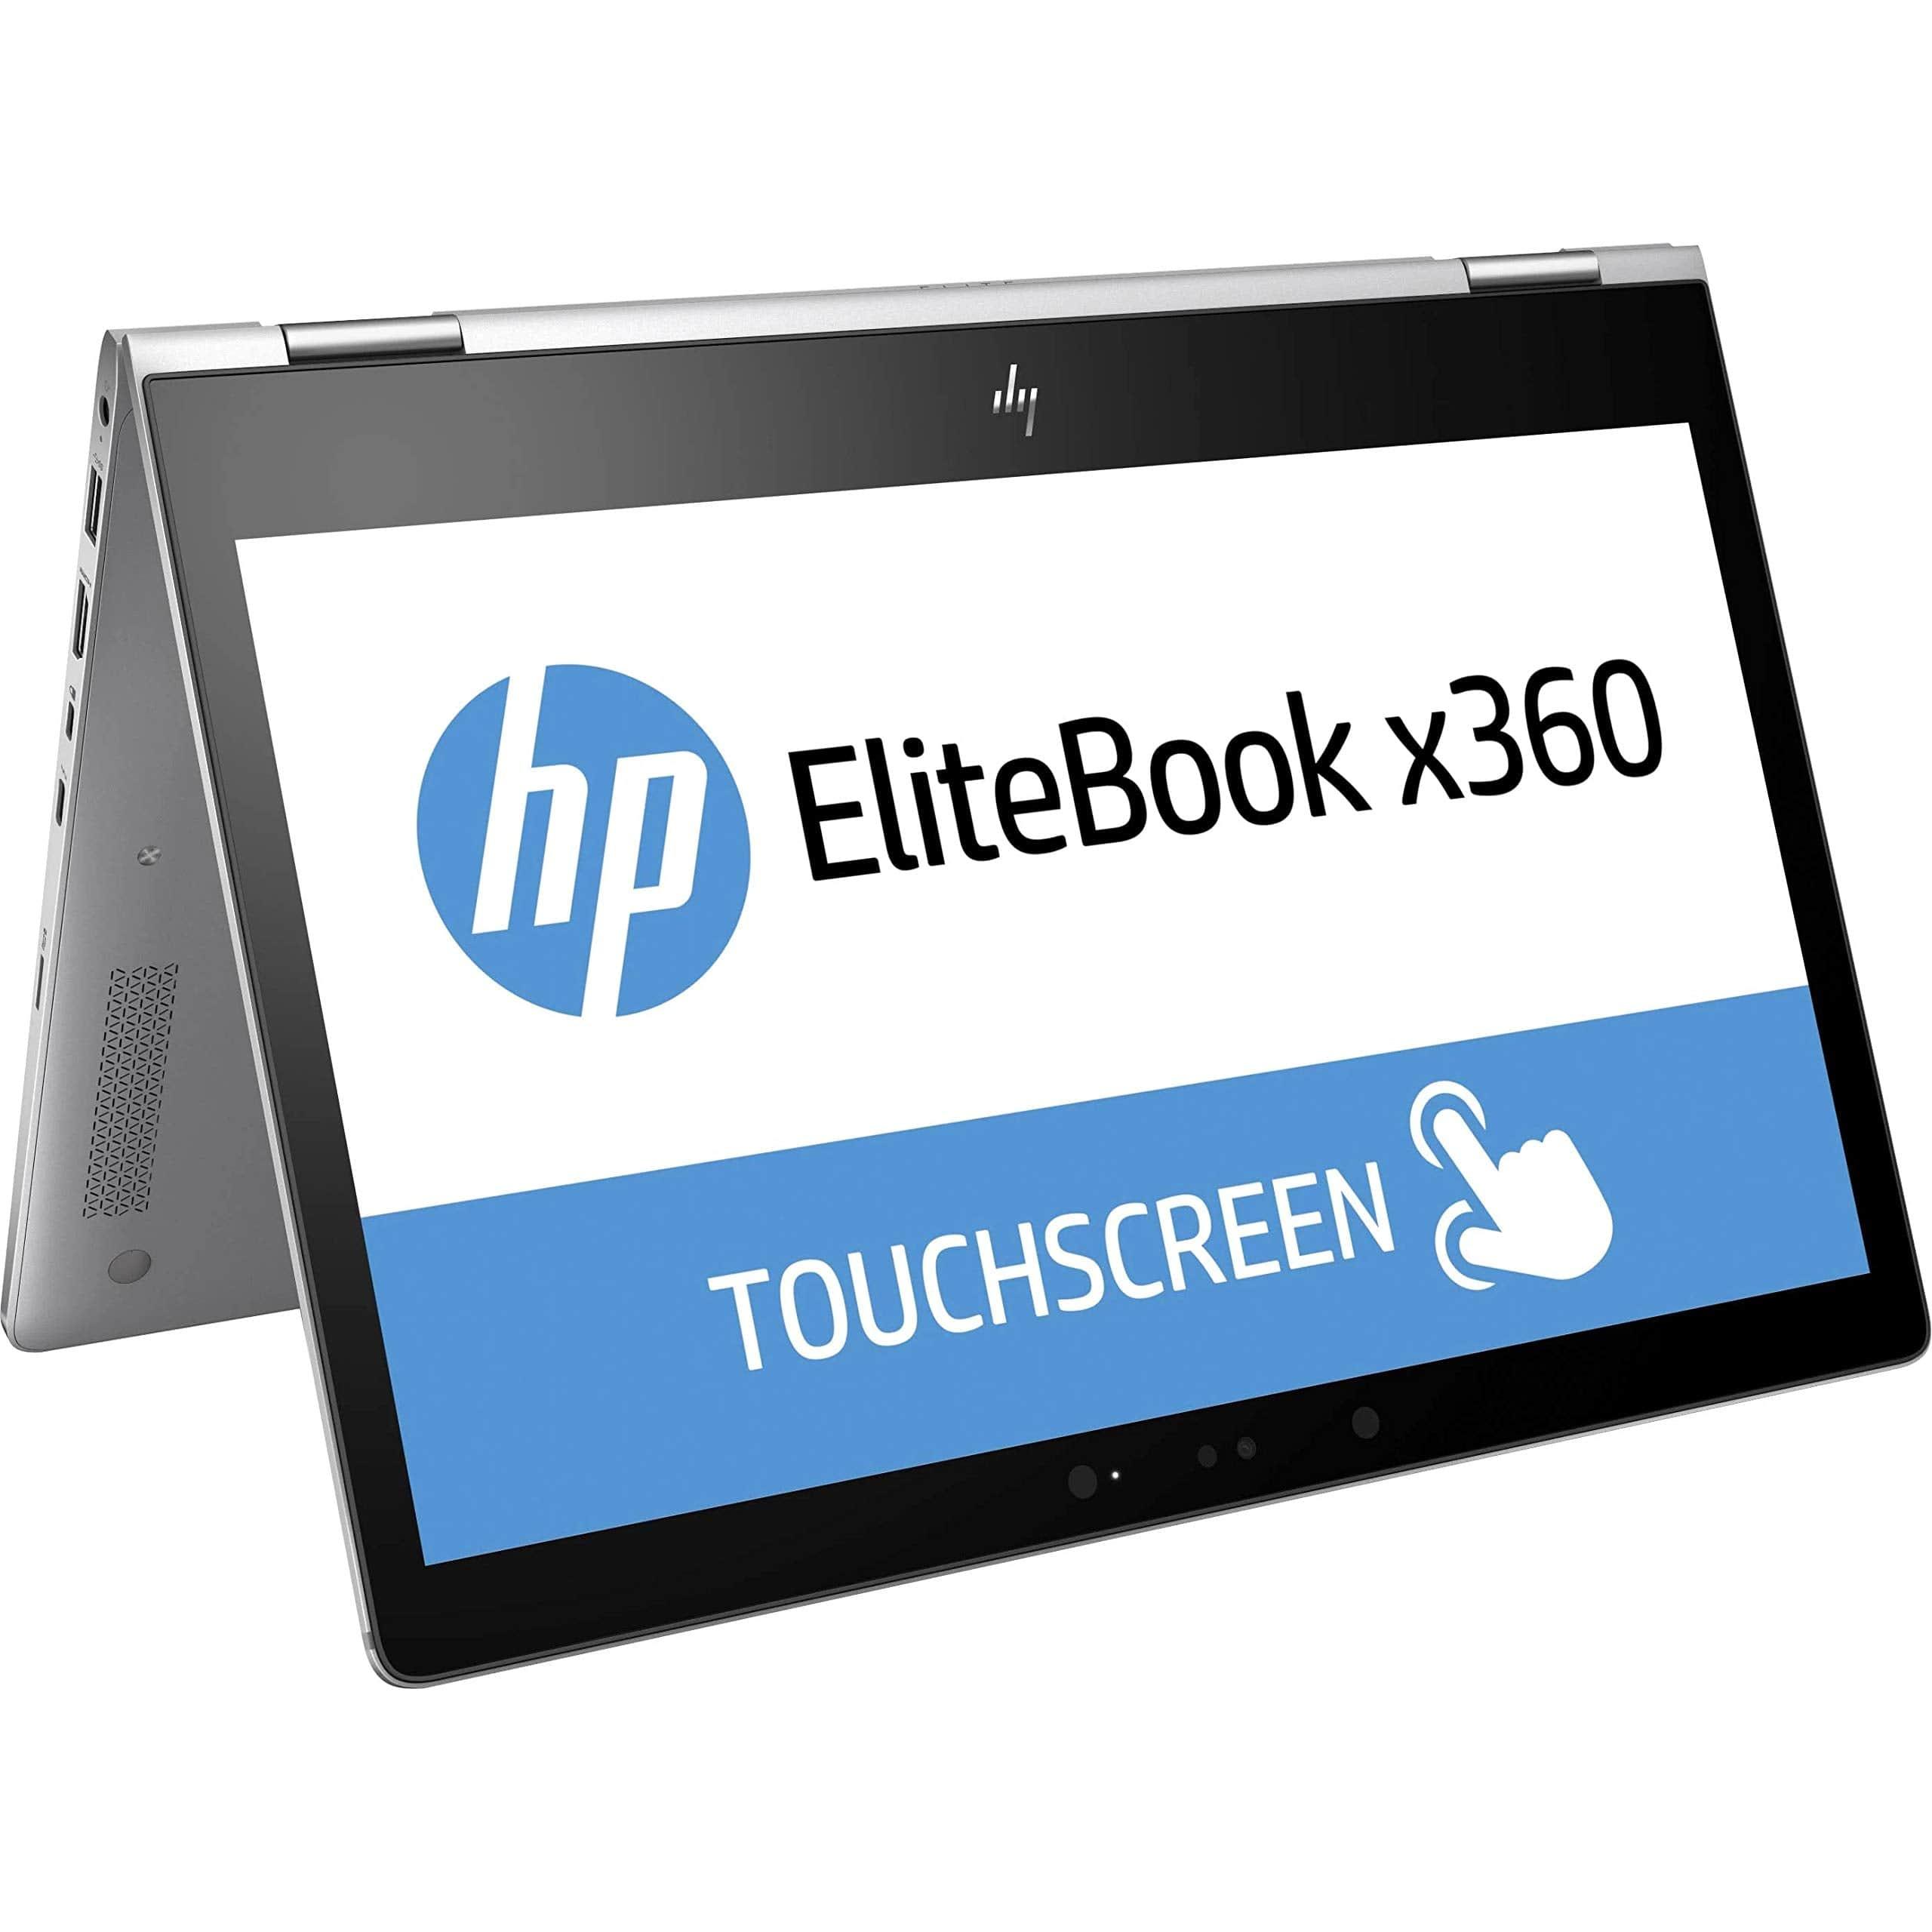 HP EliteBook X360 1030 G2 (Touchscreen), i5-7300u, 8GB, 256GB NVMe SSD - Refurbished A Grade - Regen Computers